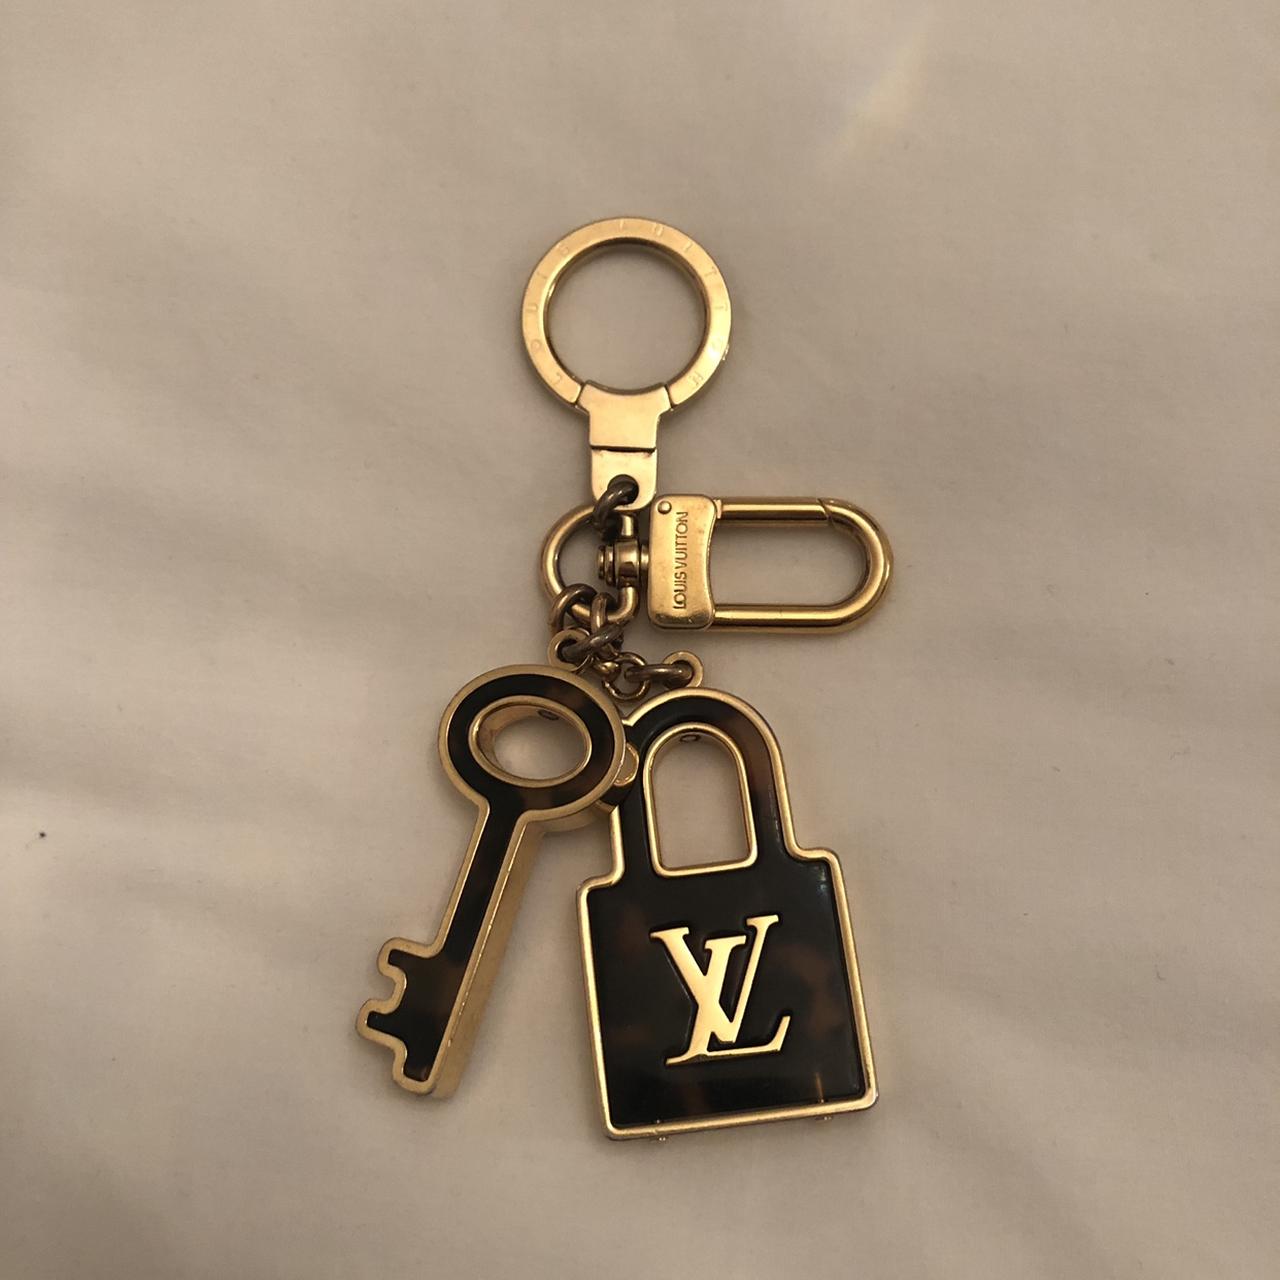 LV keychain - Depop